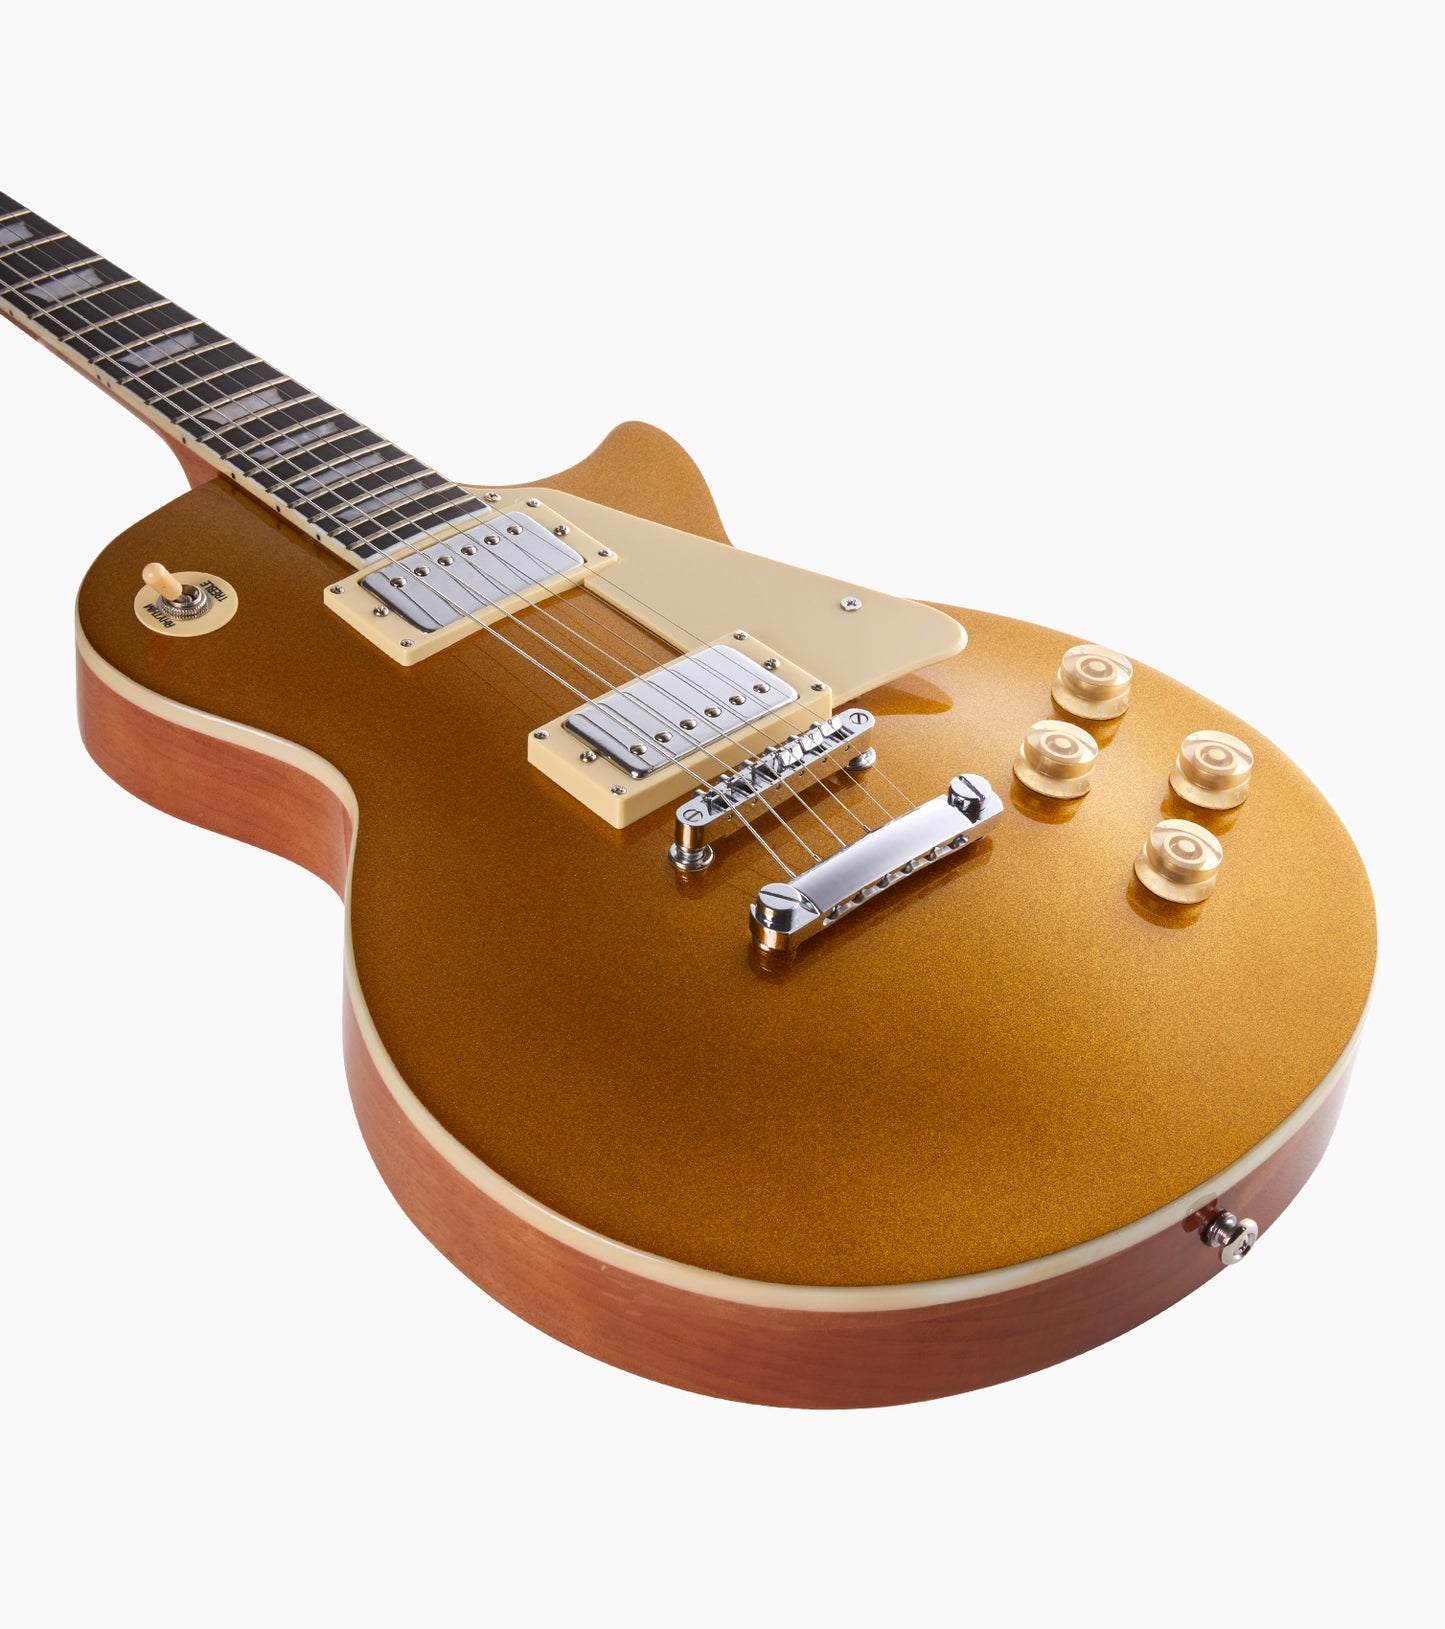 39 inch Les Paul Electric Guitar Honey - Front